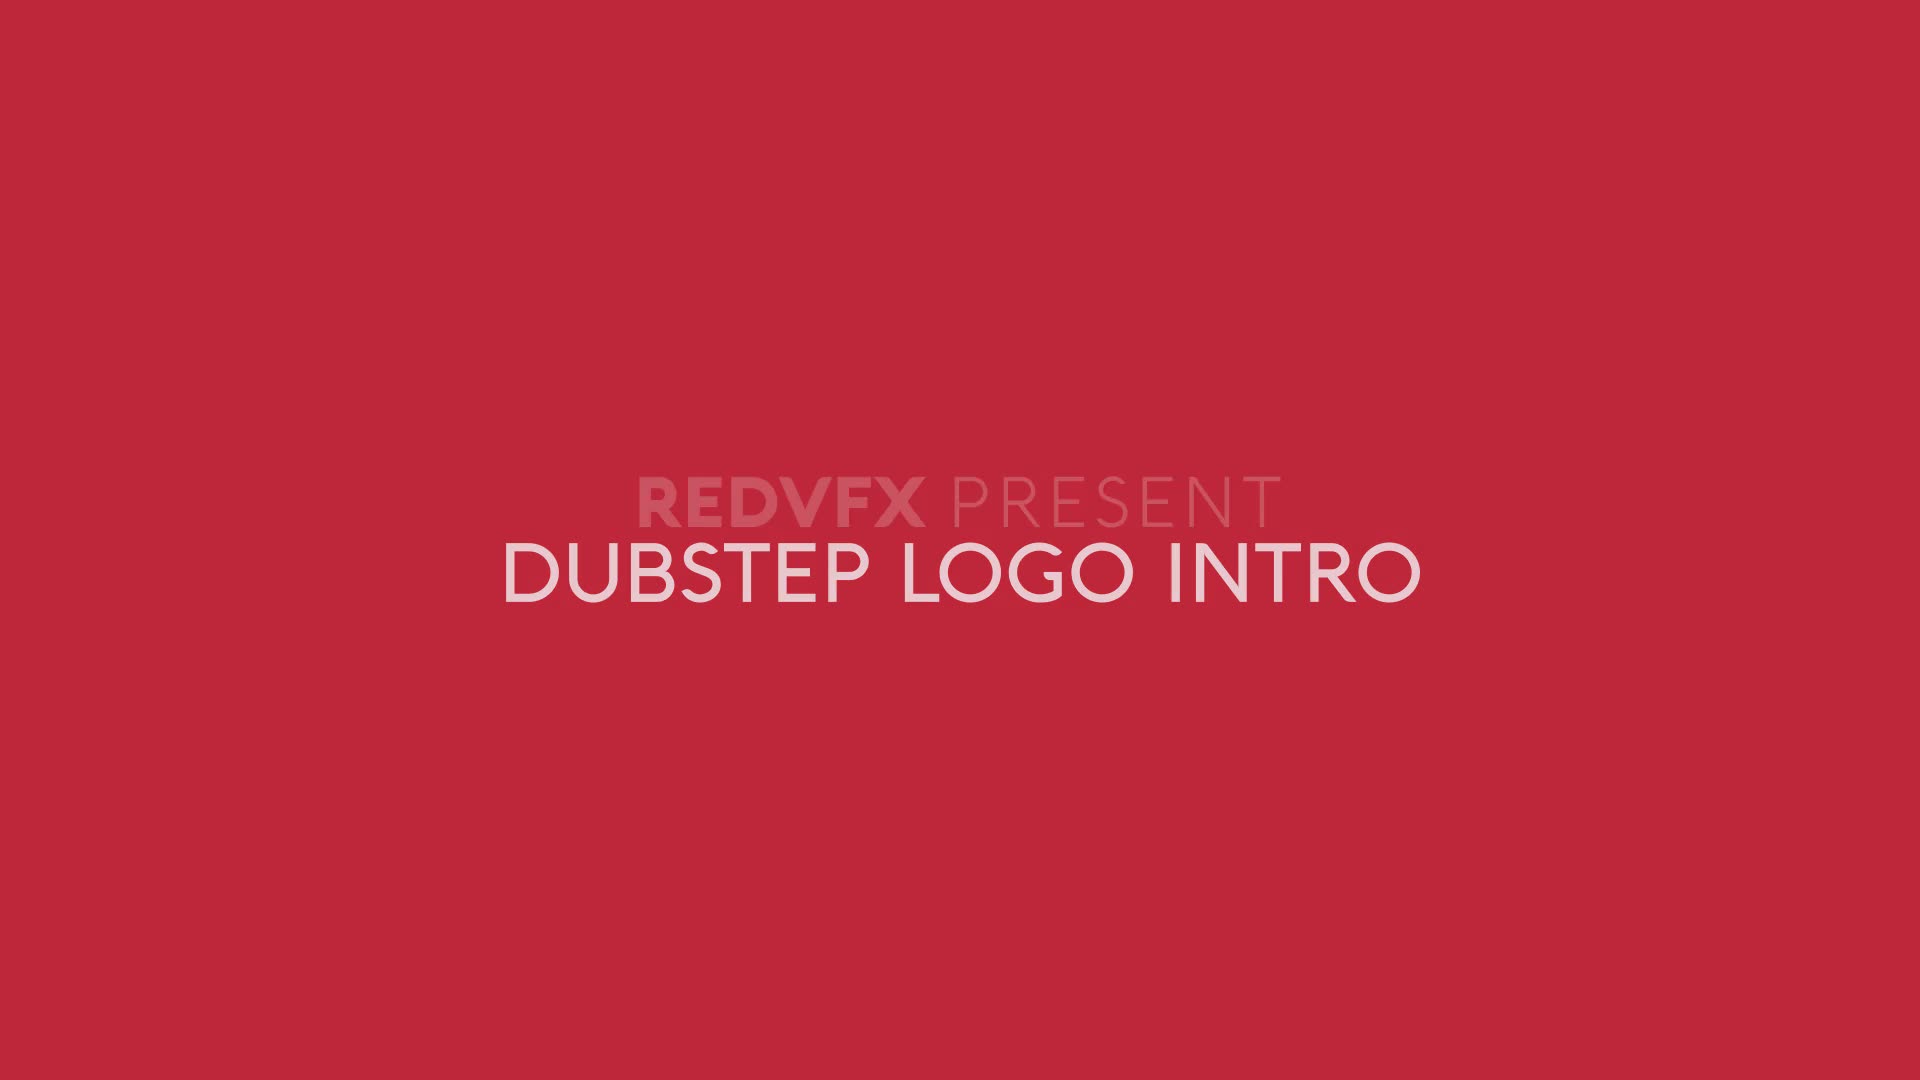 Dubstep Logo Intro Premiere Pro Template Videohive 34123028 Premiere Pro Image 2